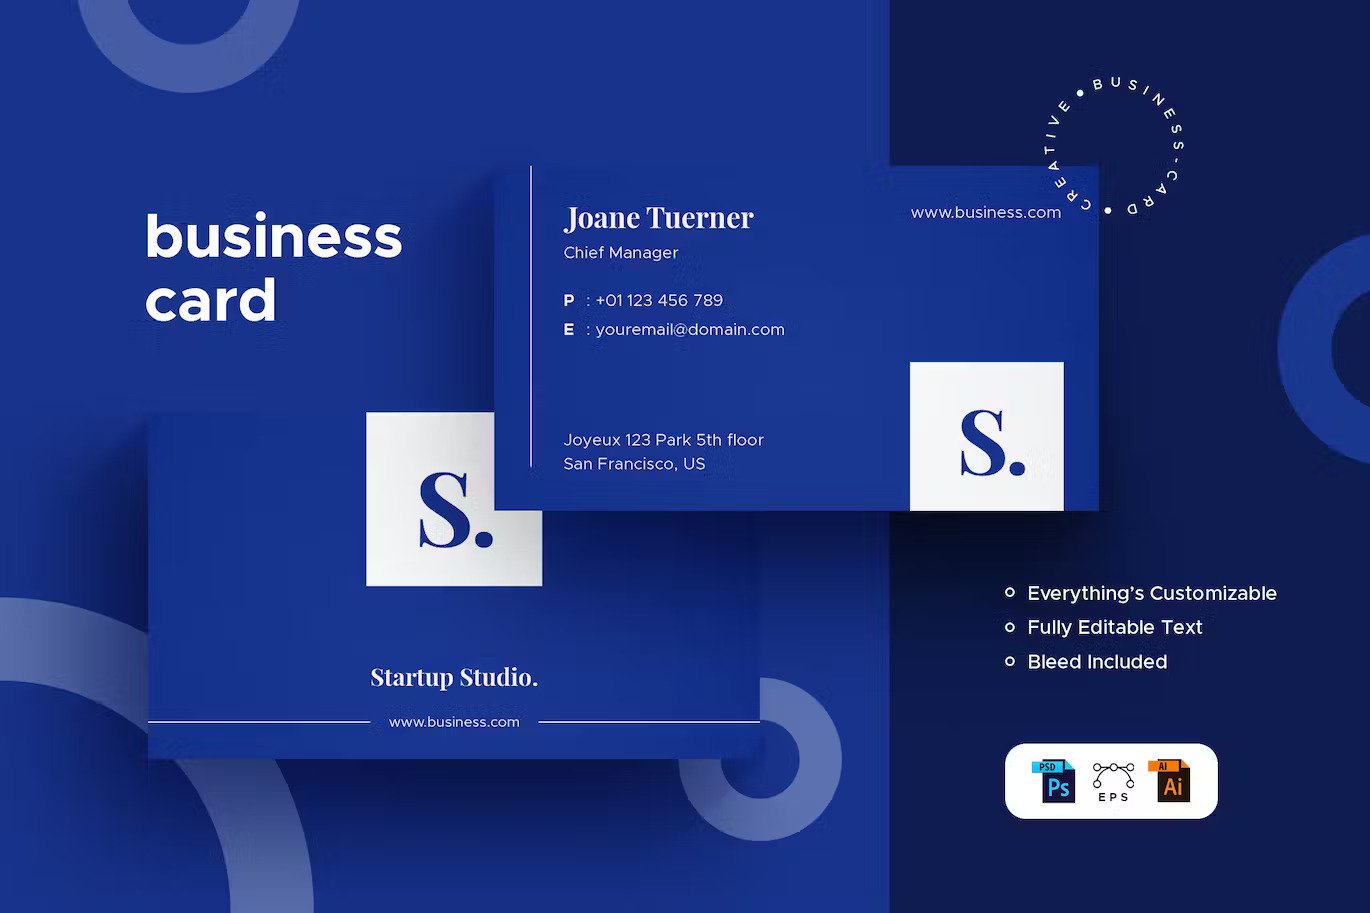 A blue business card template